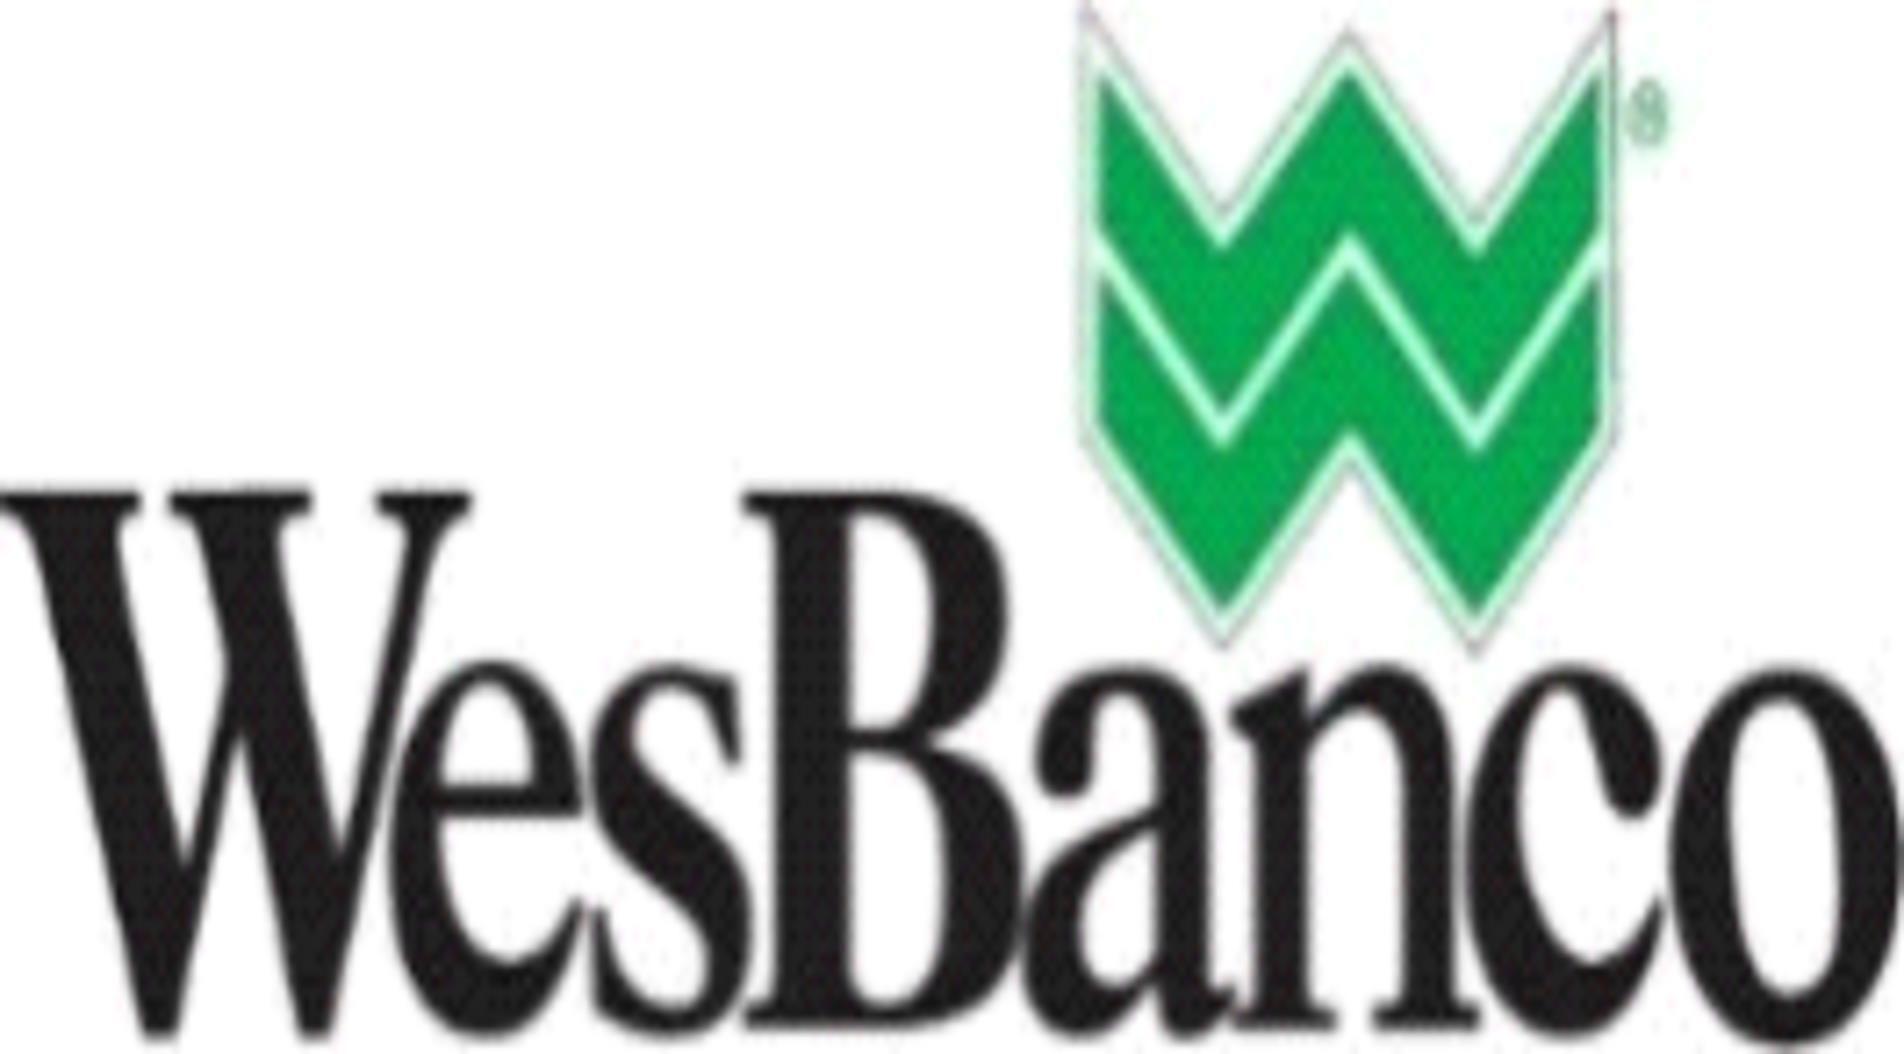 WesBanco Logo - WesBanco, Inc. press release dated May 31, 2019.